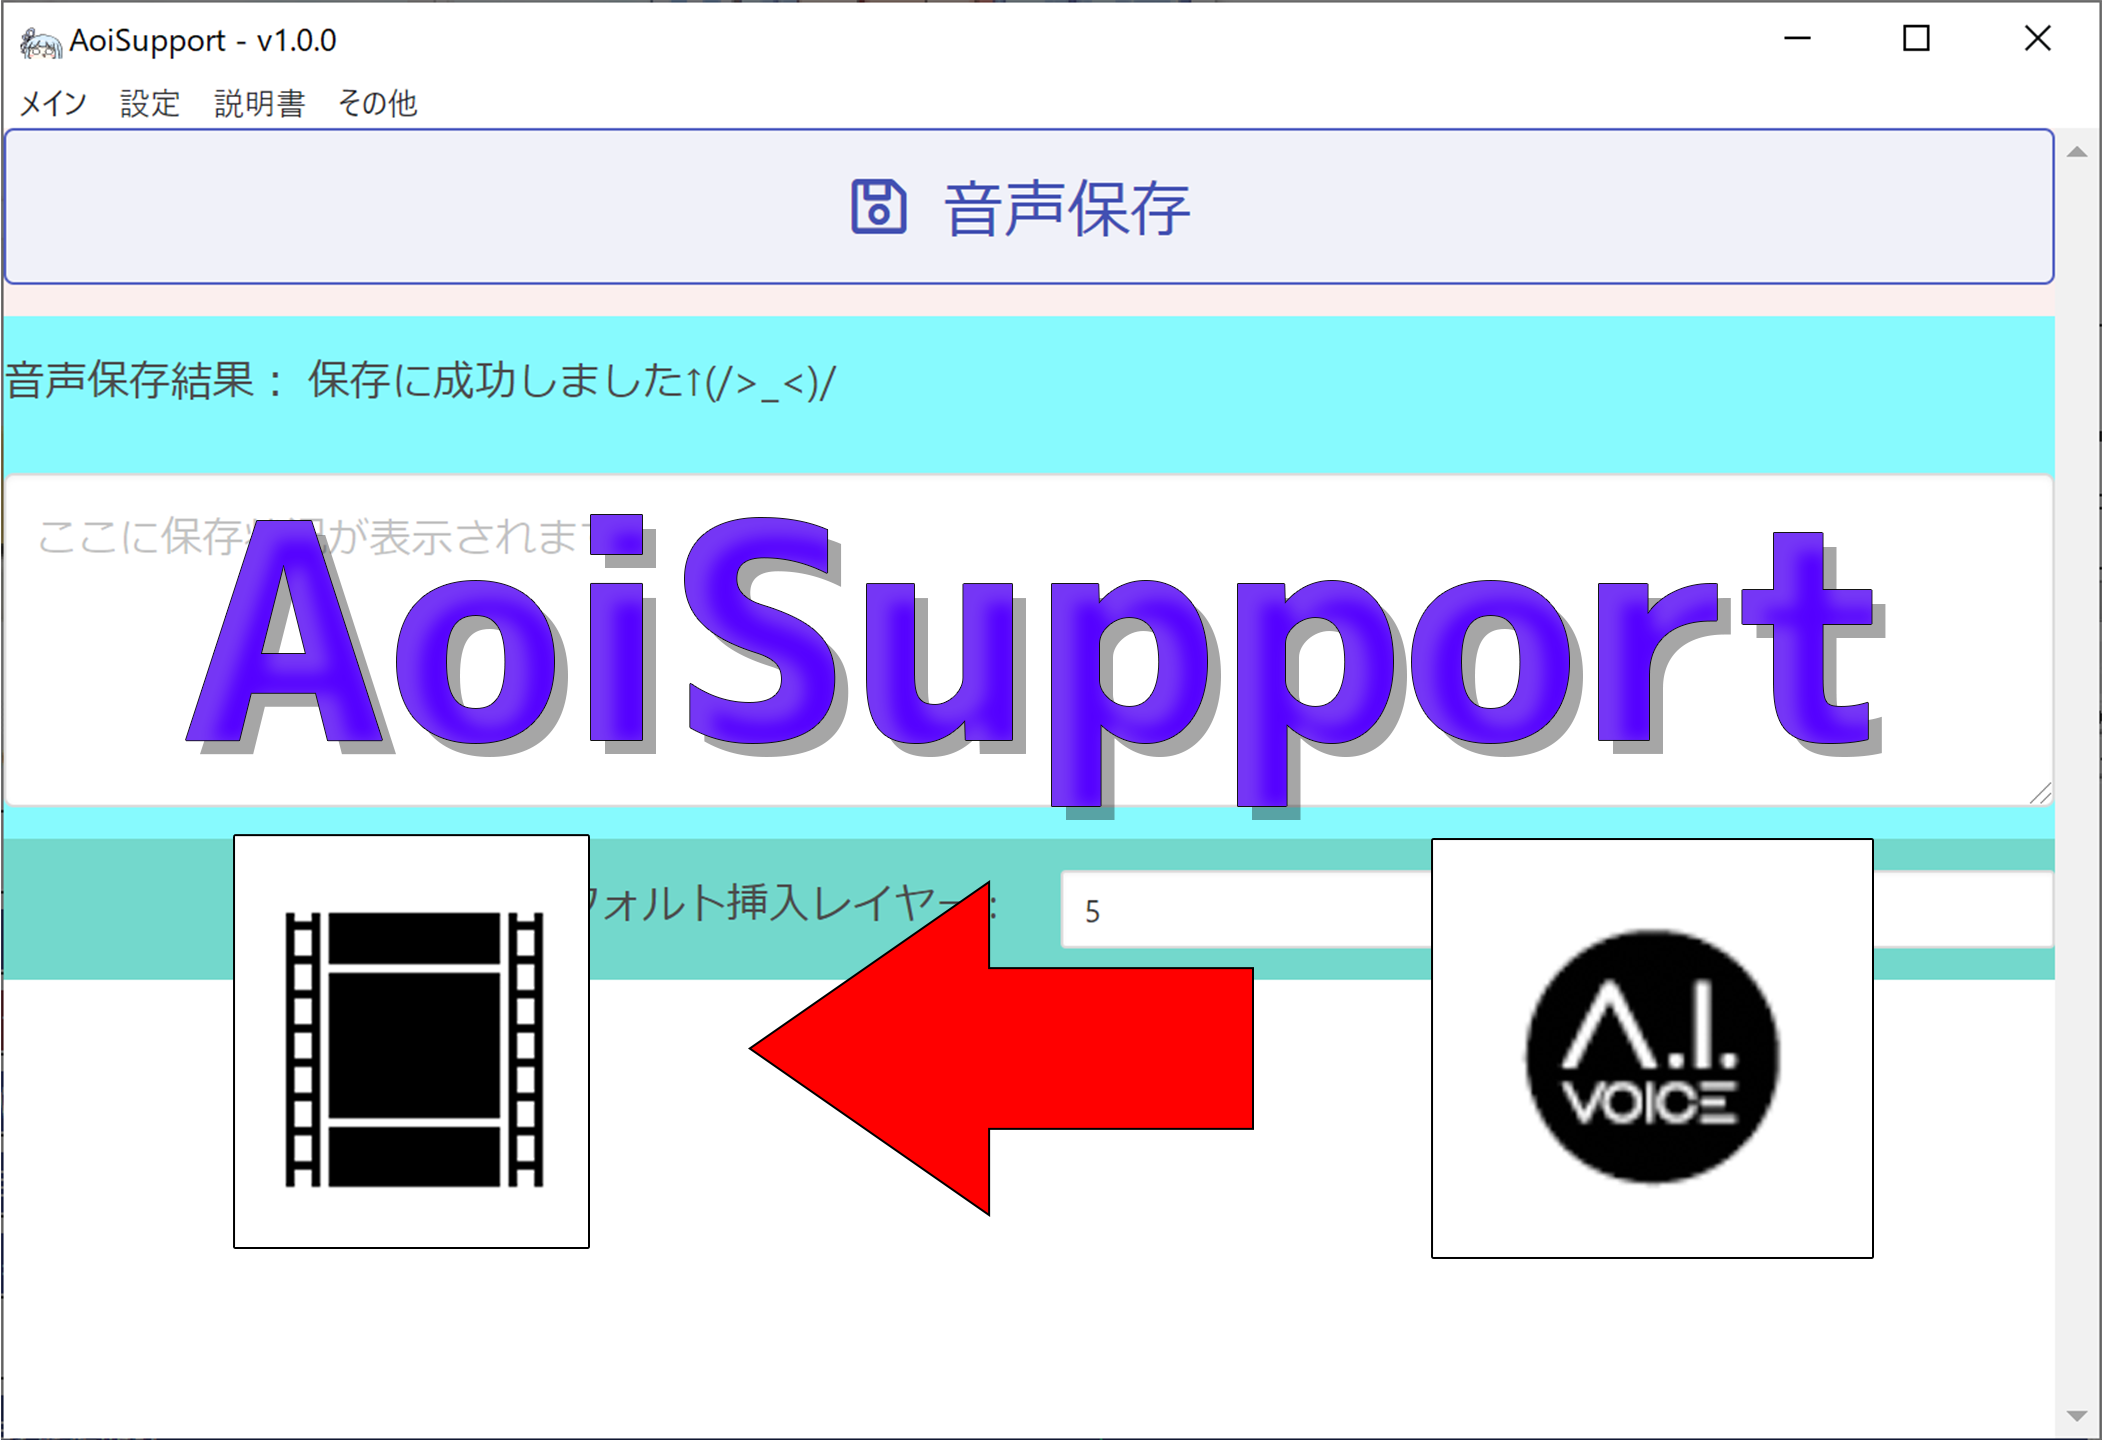 AoiSupport -音声合成ソフトを利用した動画制作の支援ツール-